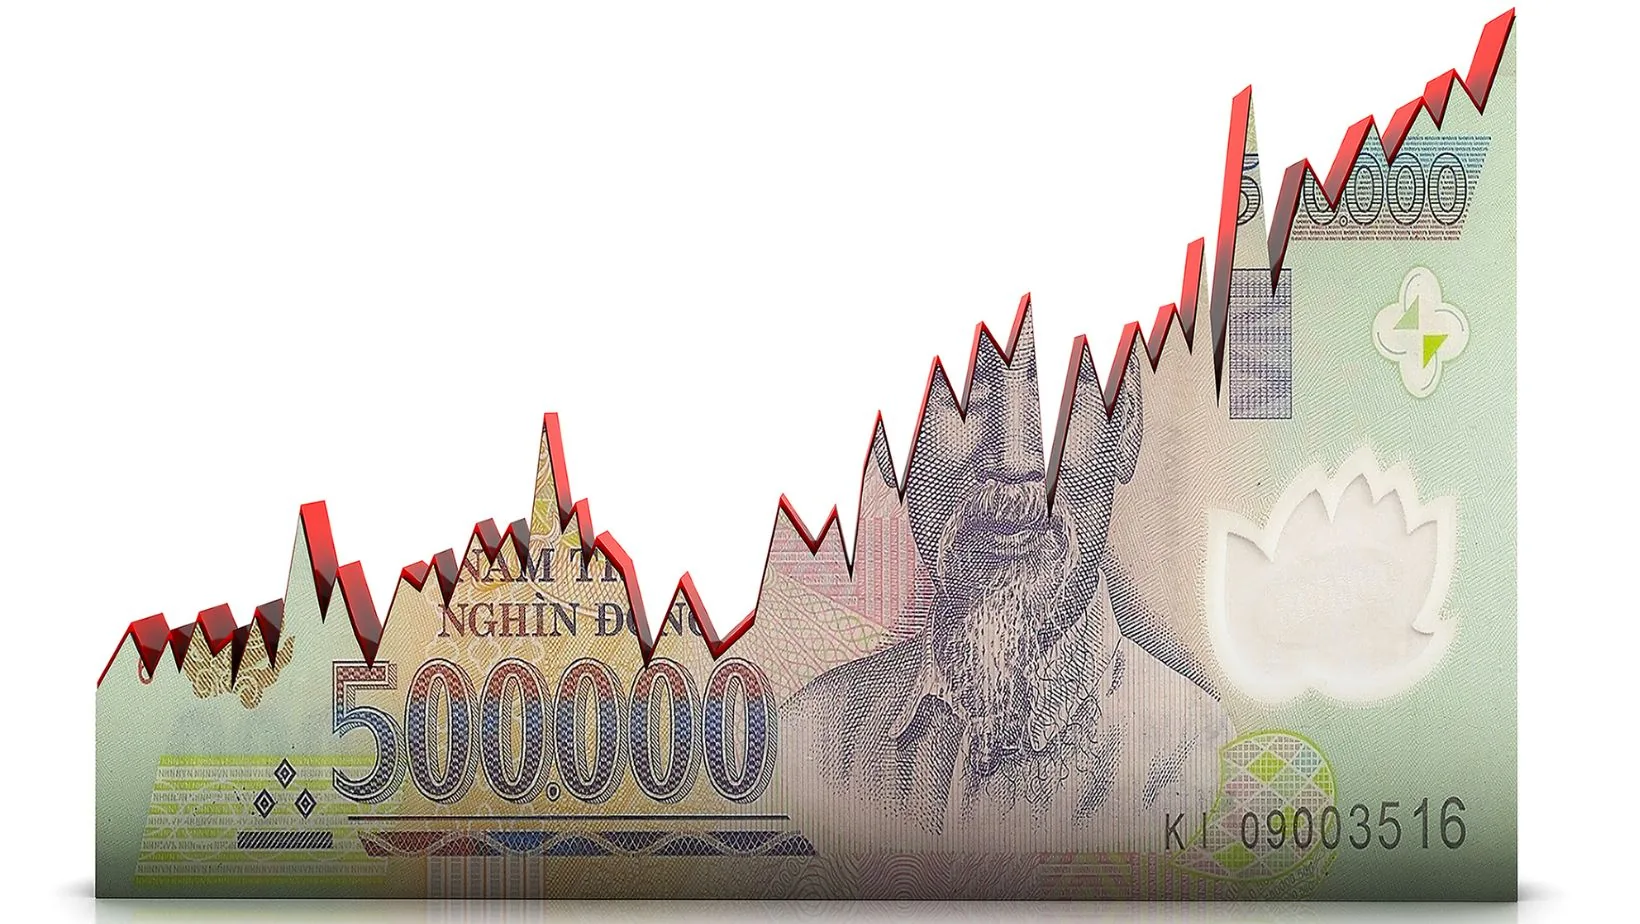 Wang kertas 500,000 dolar Vietnam sebagai graf